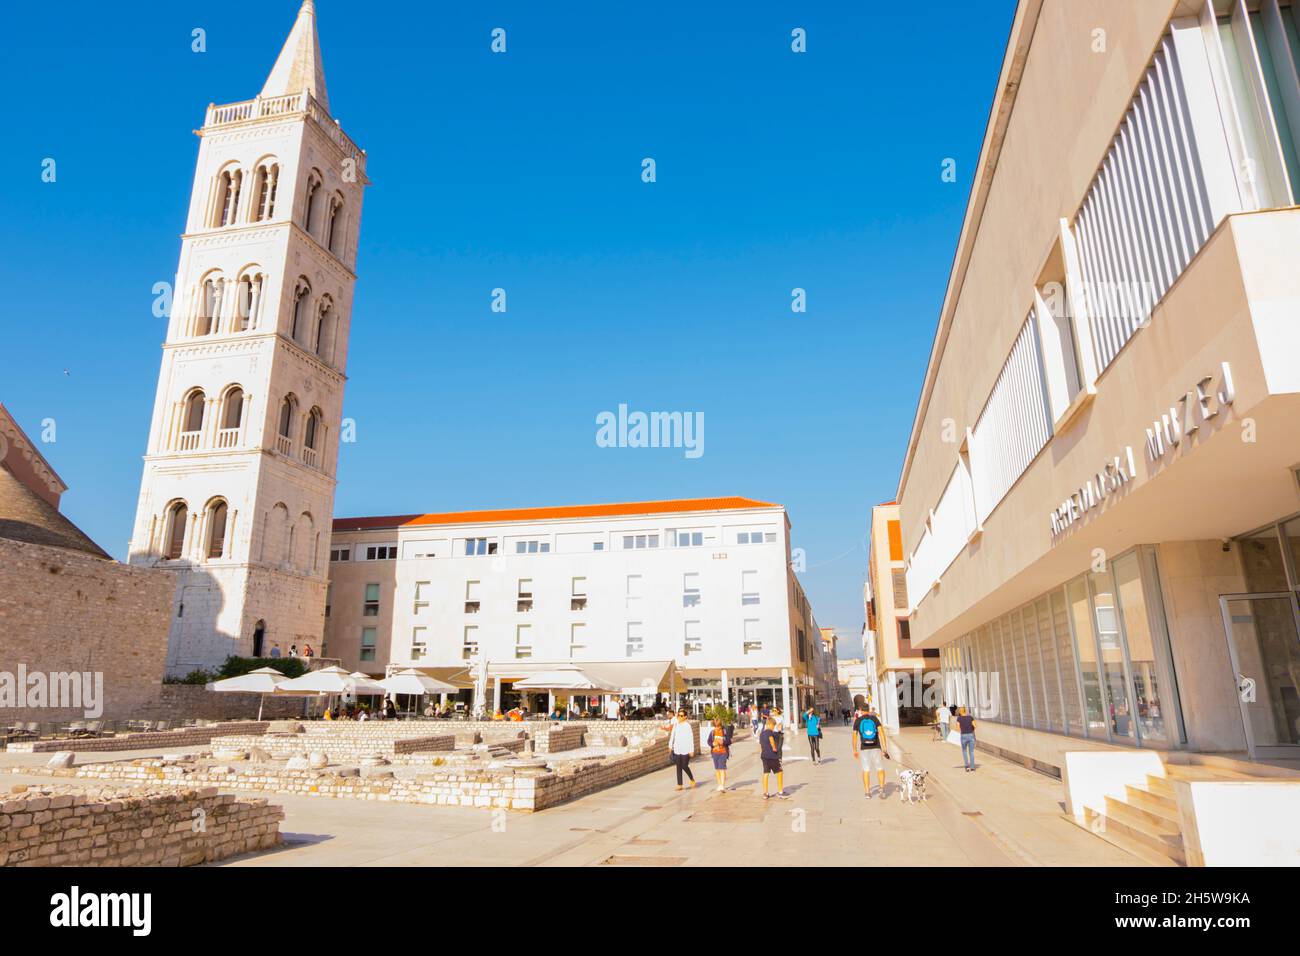 Zeleni trg, Forum, old town, Zadar, Croatia Stock Photo